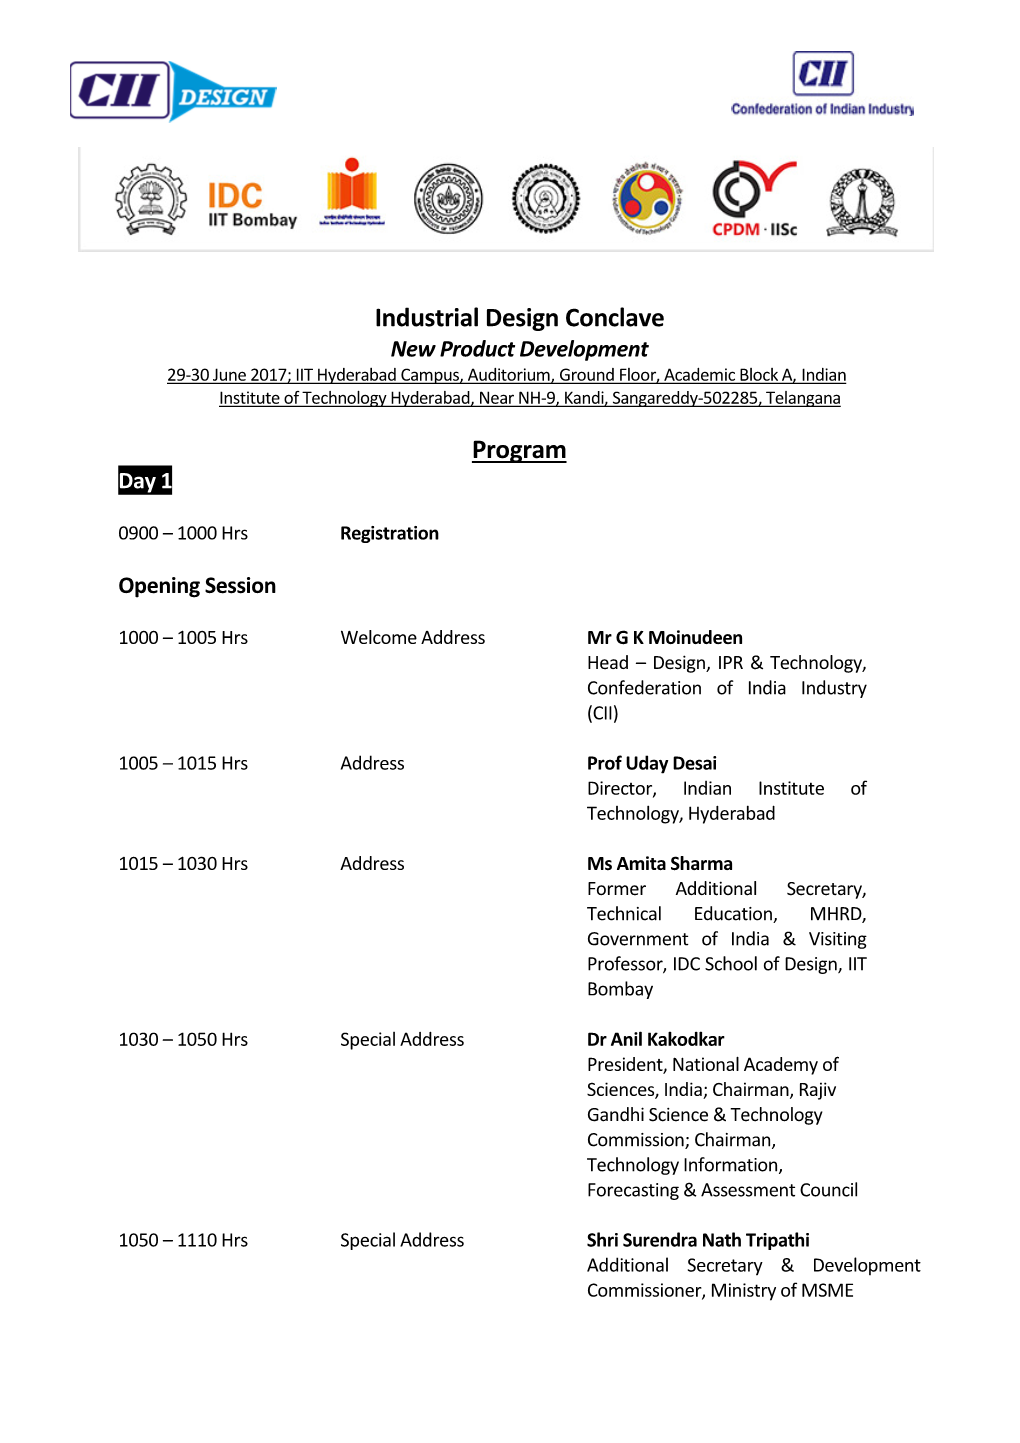 Industrial Design Conclave Program